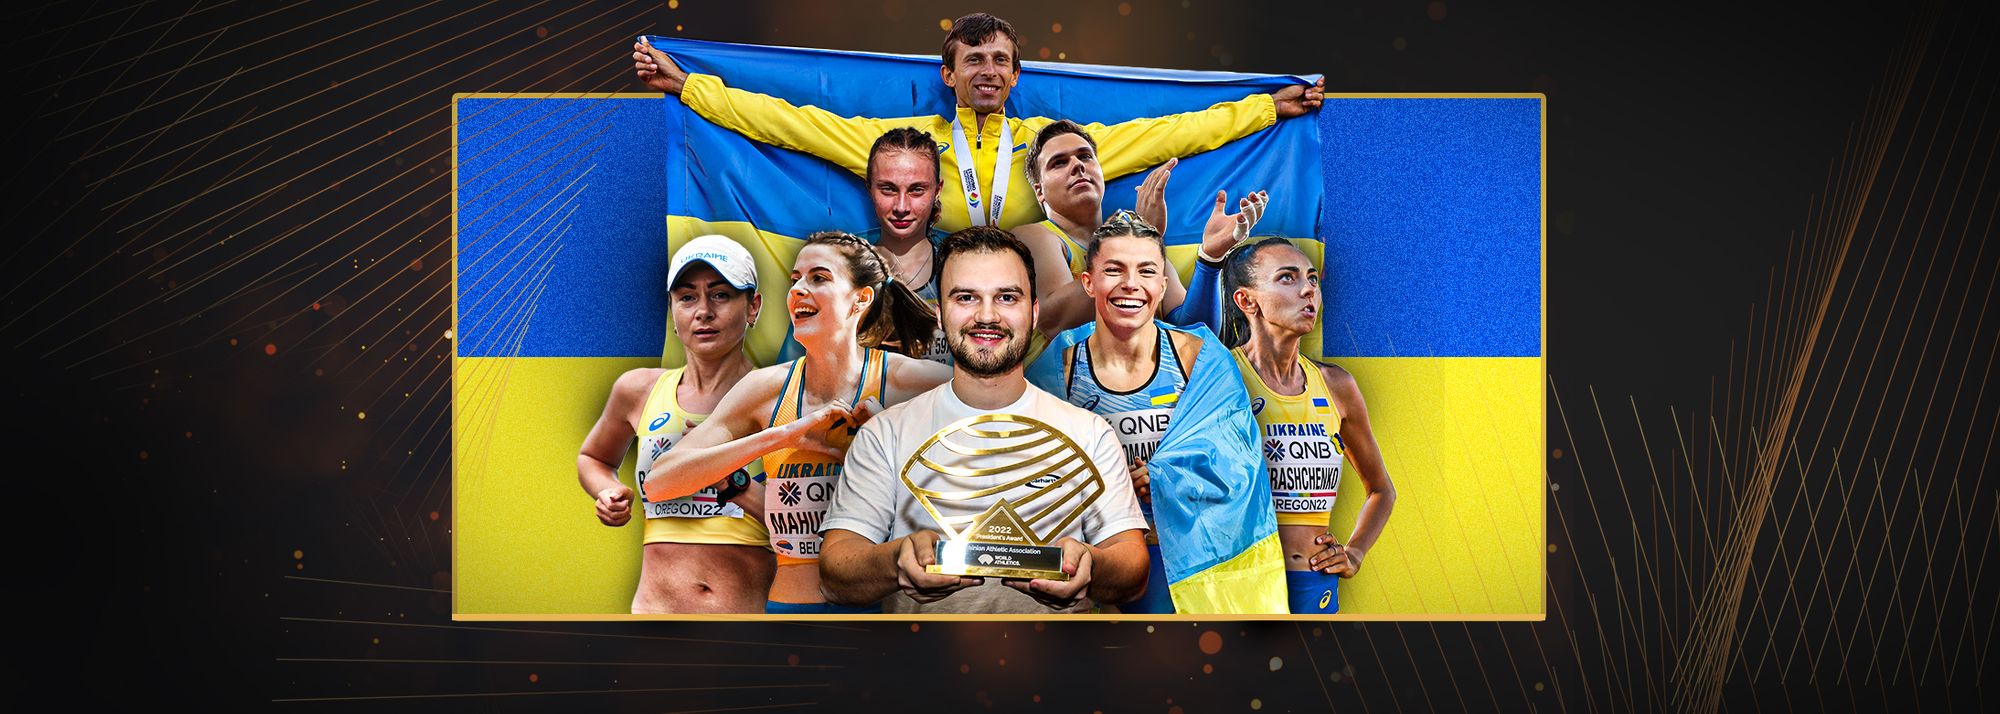 The Ukrainian Athletic Association has been awarded the President’s Award as part of the World Athletics Awards 2022.